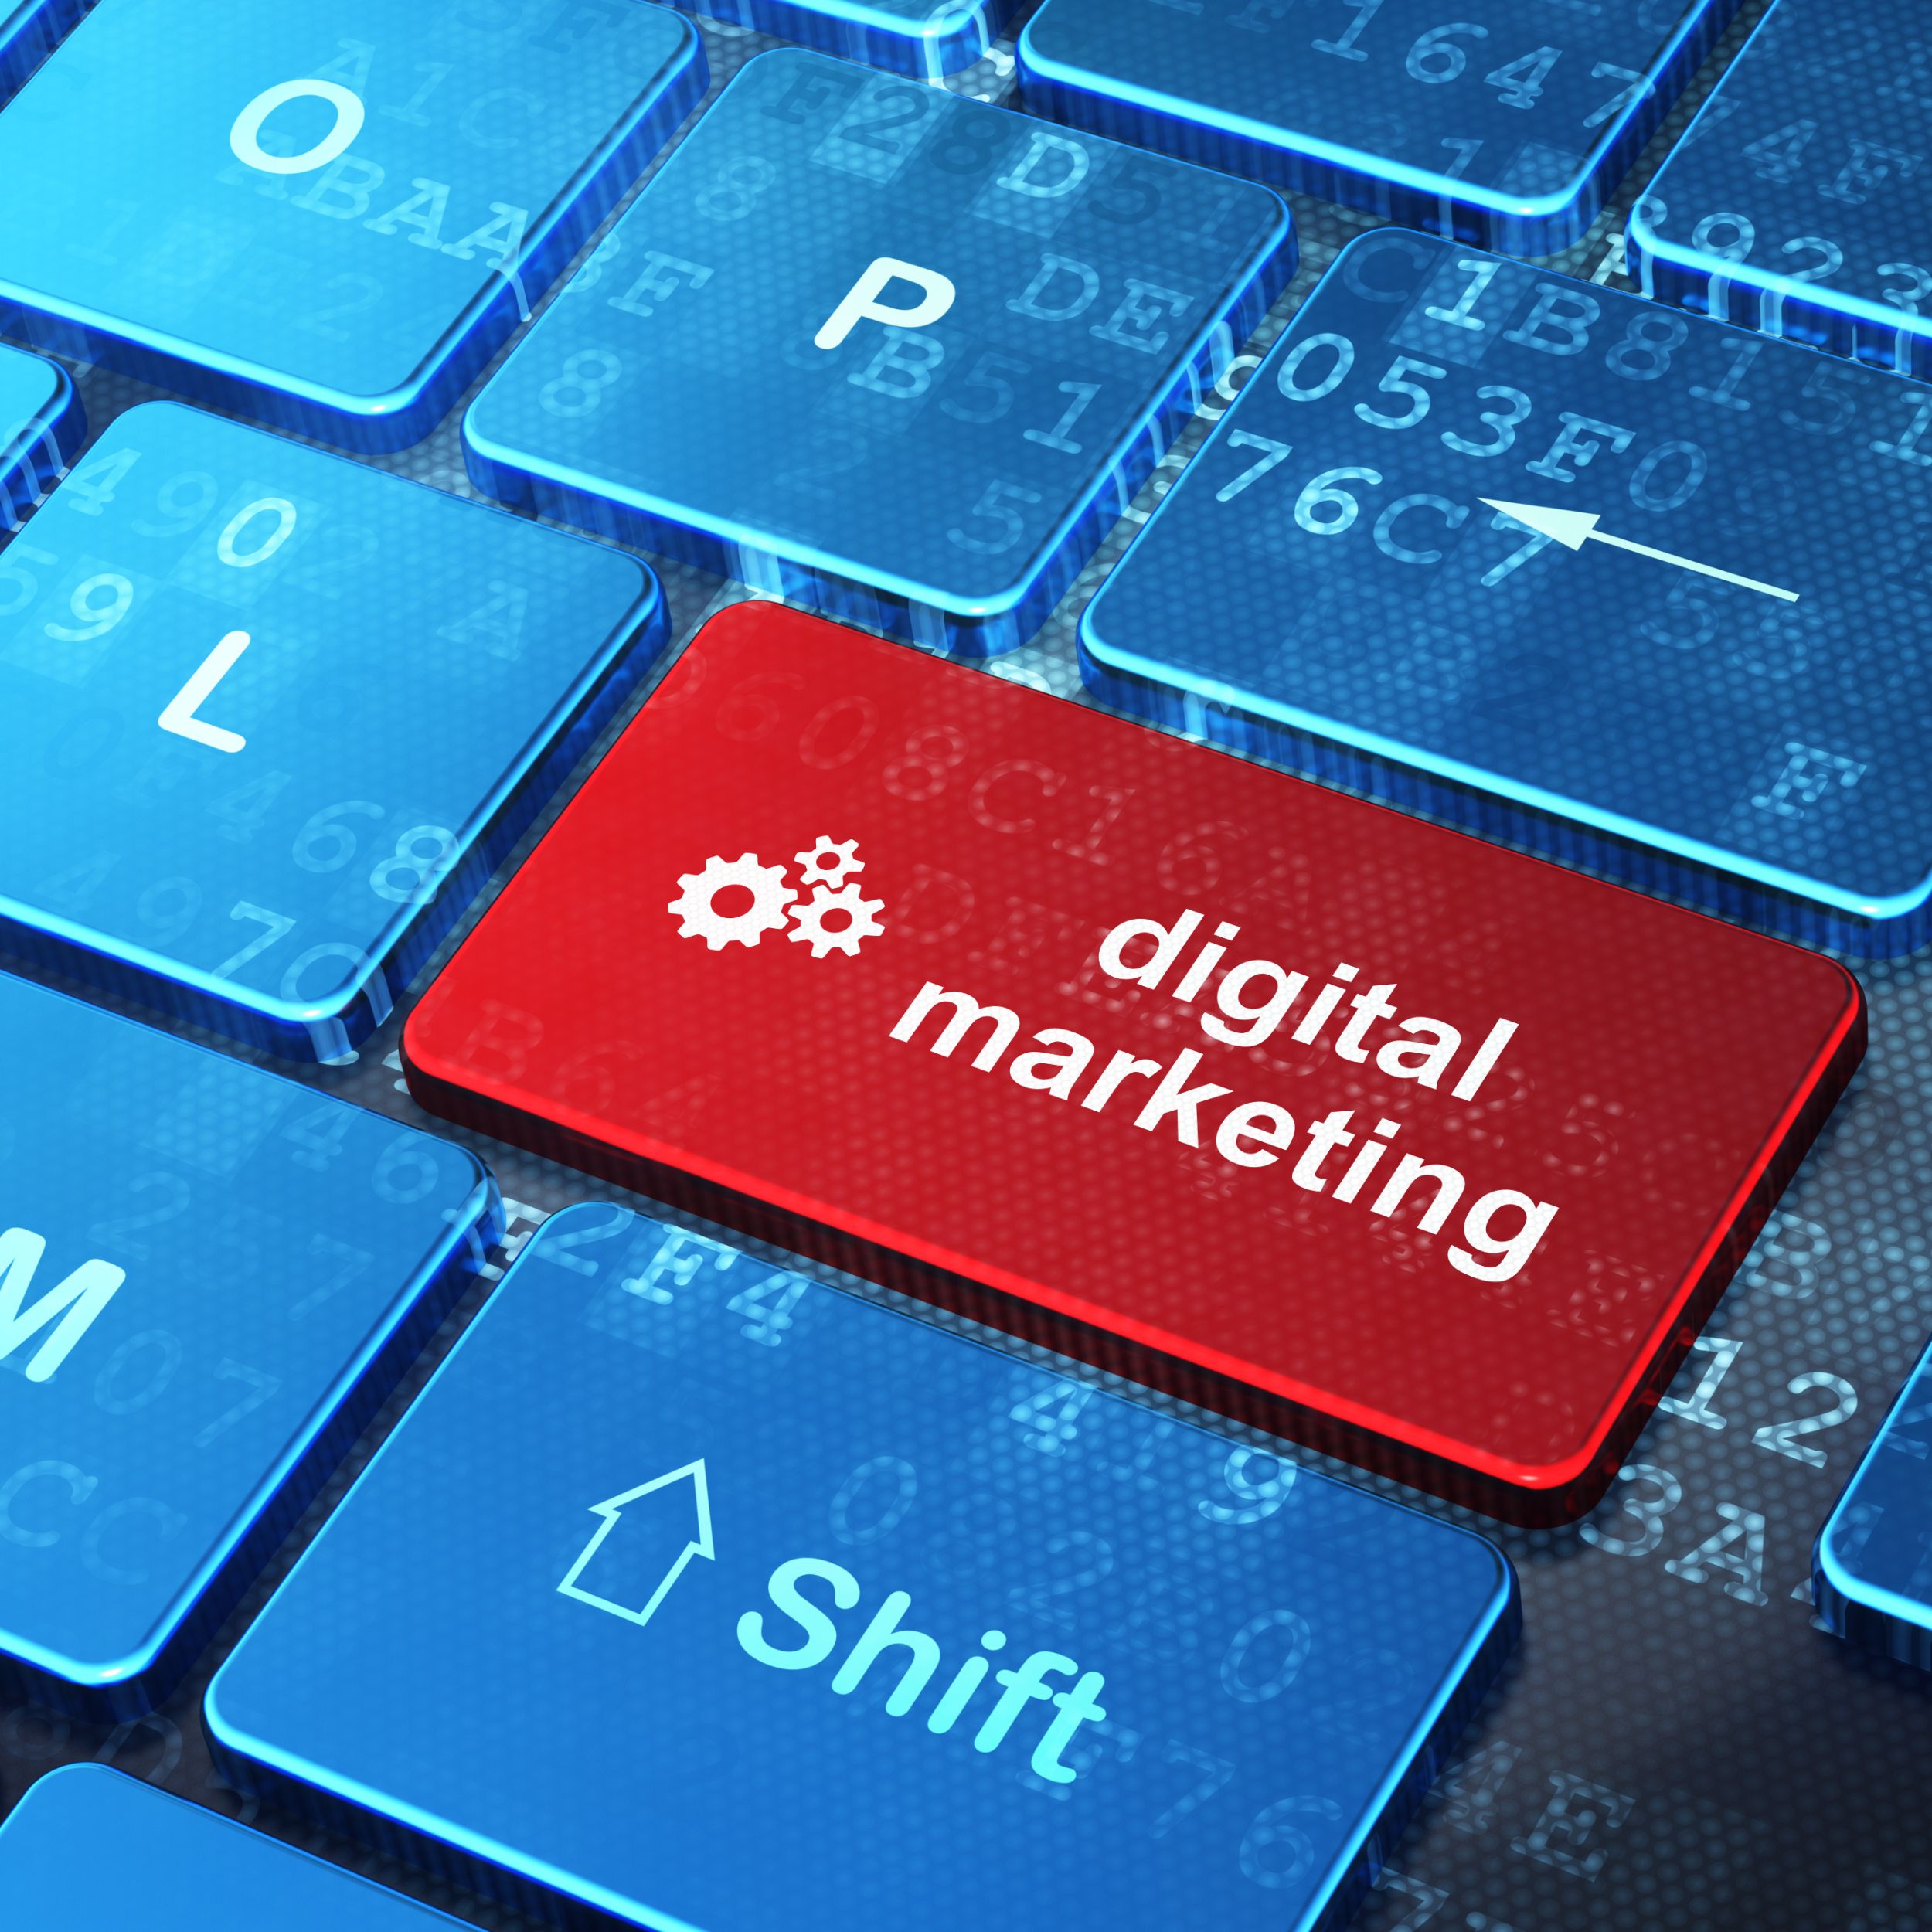 How to choose my digital marketing agency? 